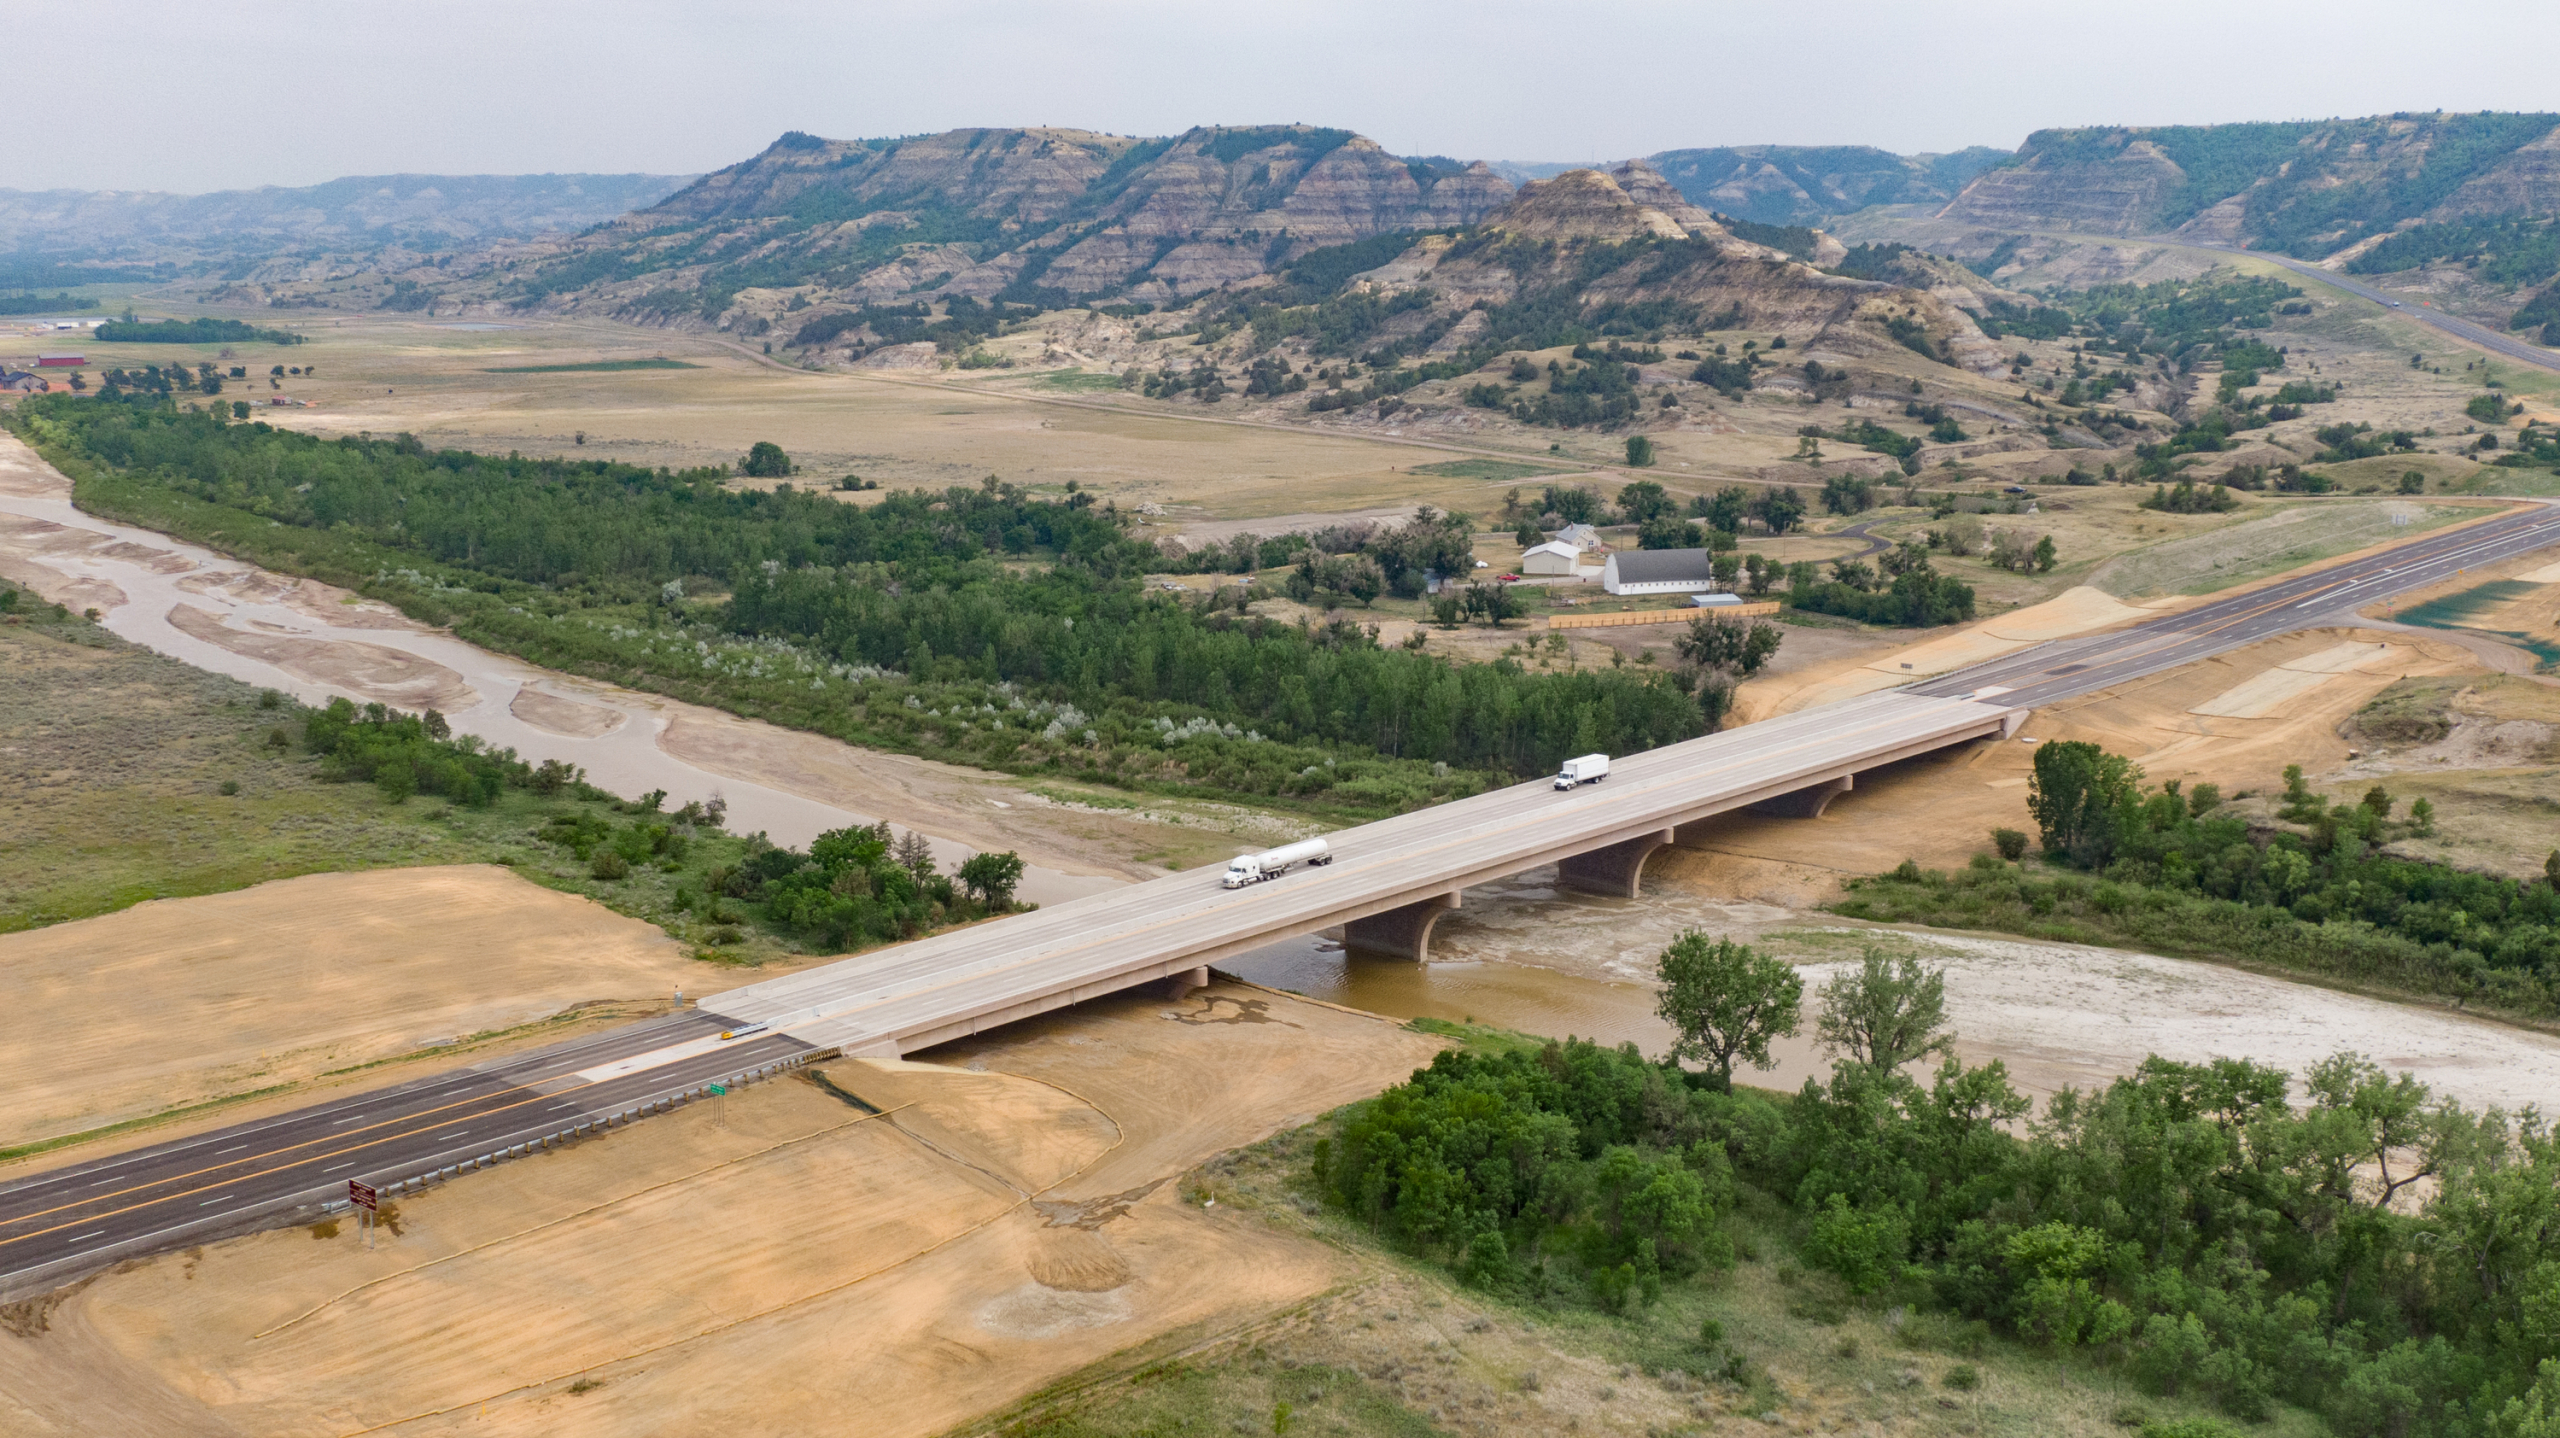 Photo of trucks crossing the Long X Bridge on Highway 85.